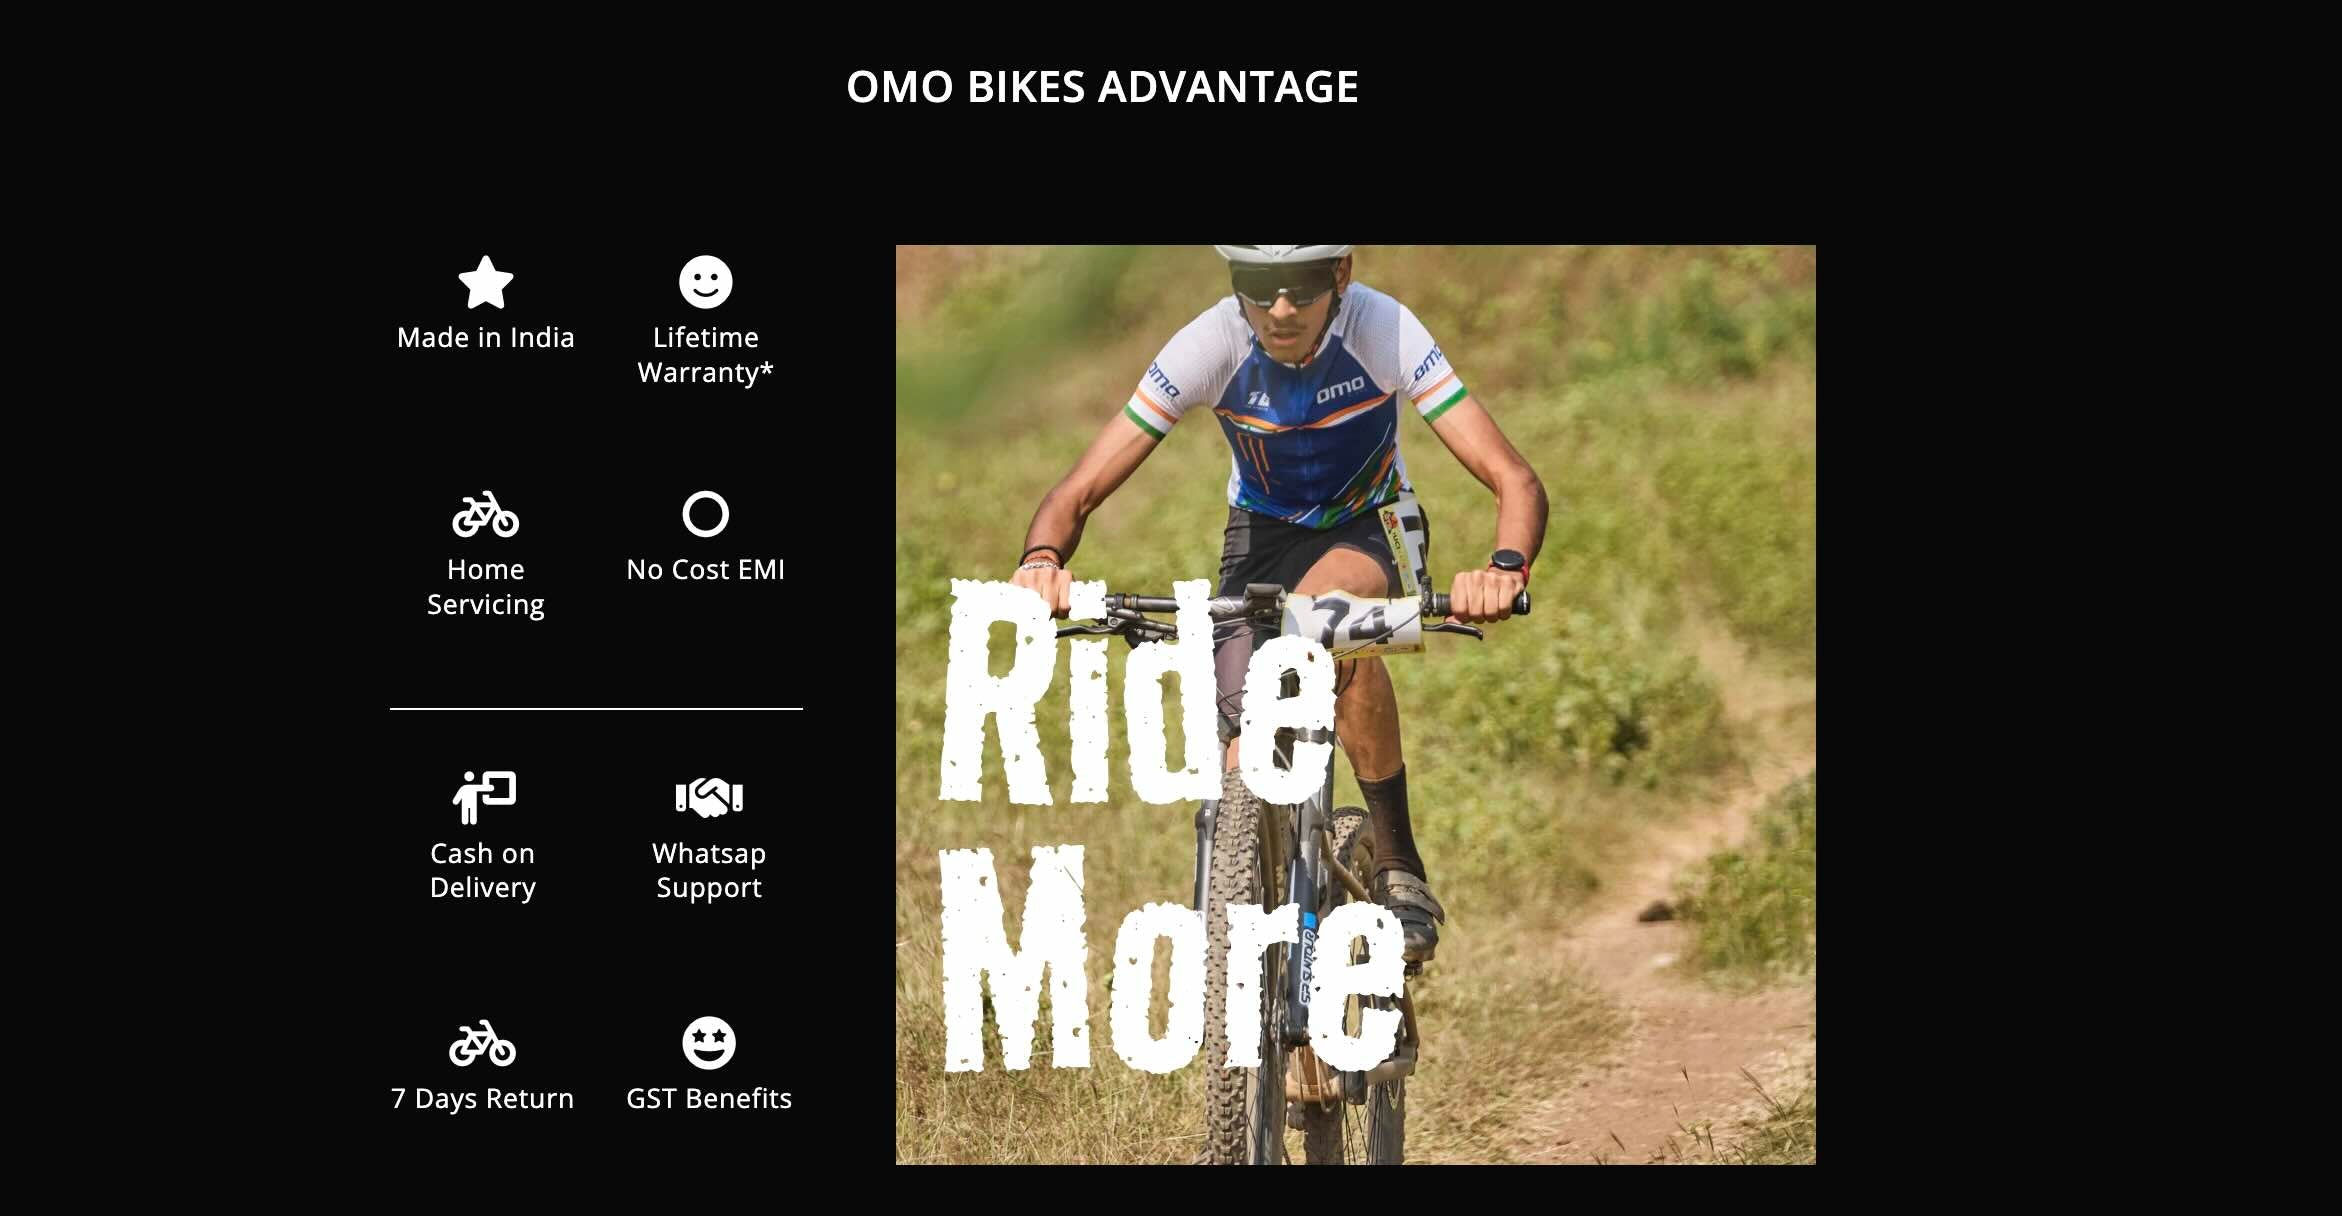 omobikes ladakh hybrid bike advantage over other brand